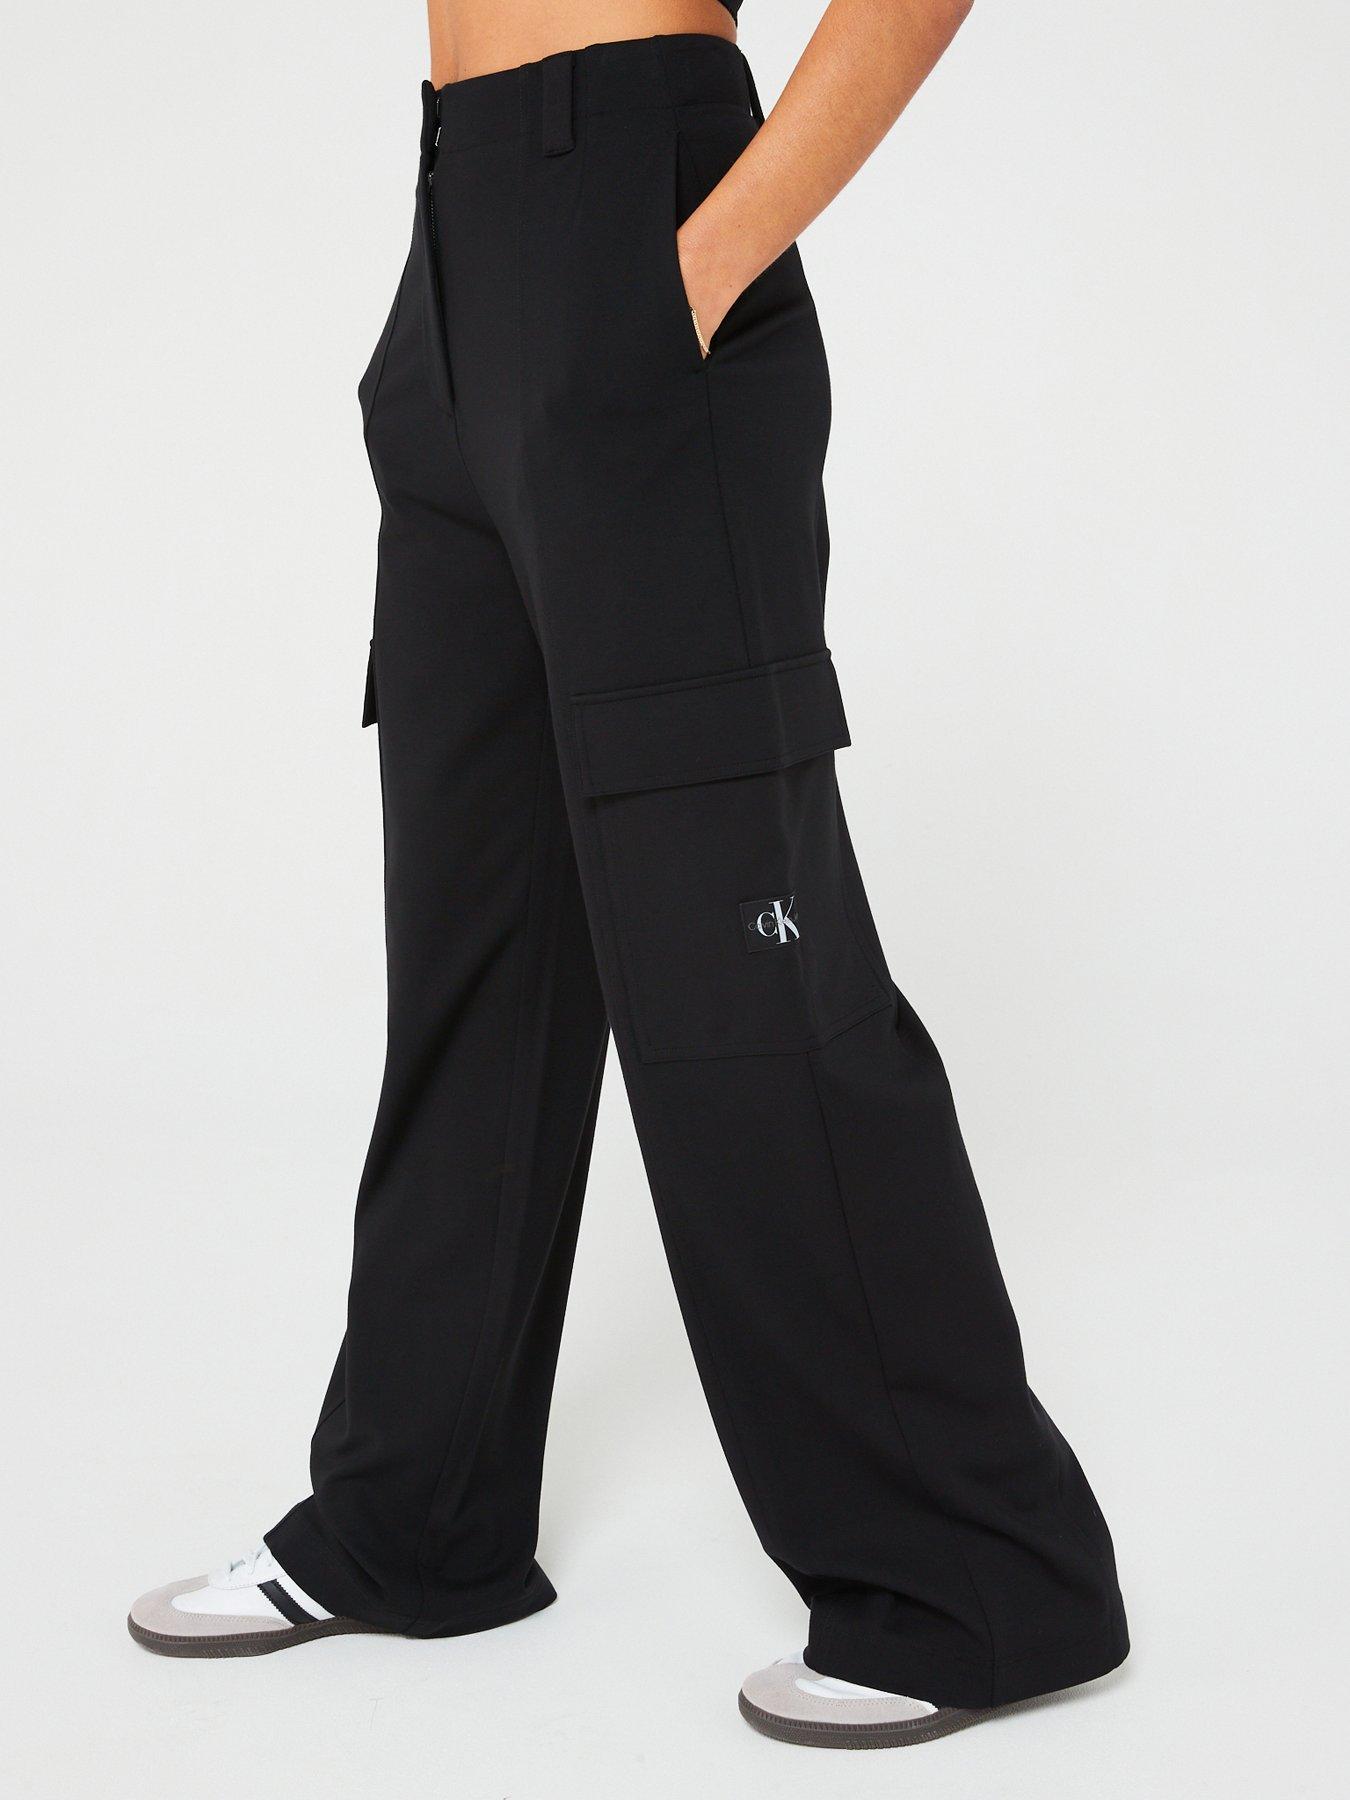 Calvin klein, Trousers & leggings, Women